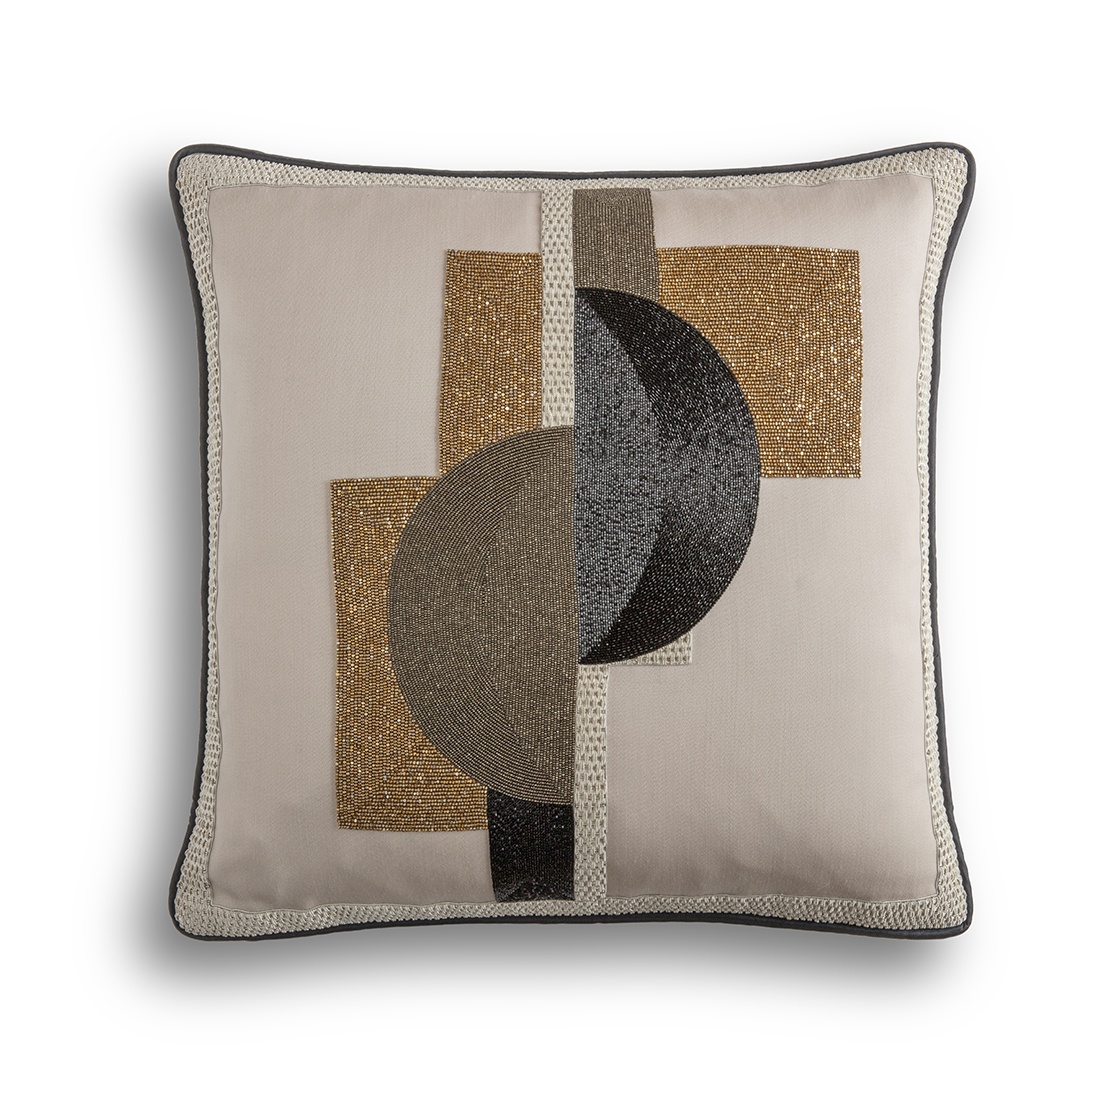 Piet cushion in Eriskay wool - Pebble - Beaumont & Fletcher